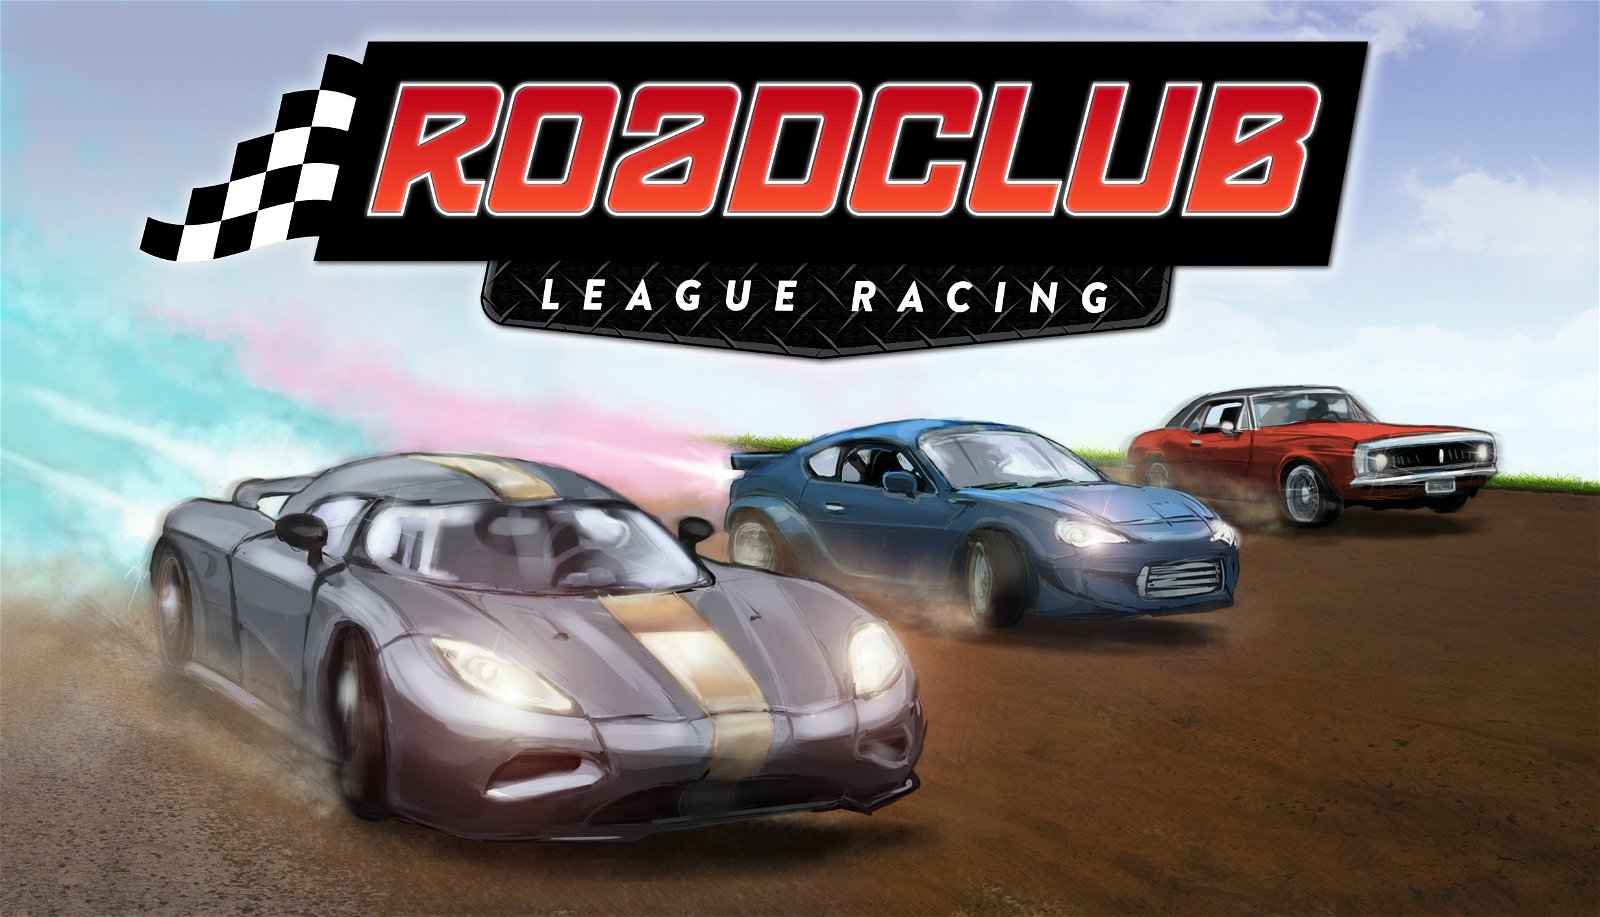 Image of Roadclub: League Racing